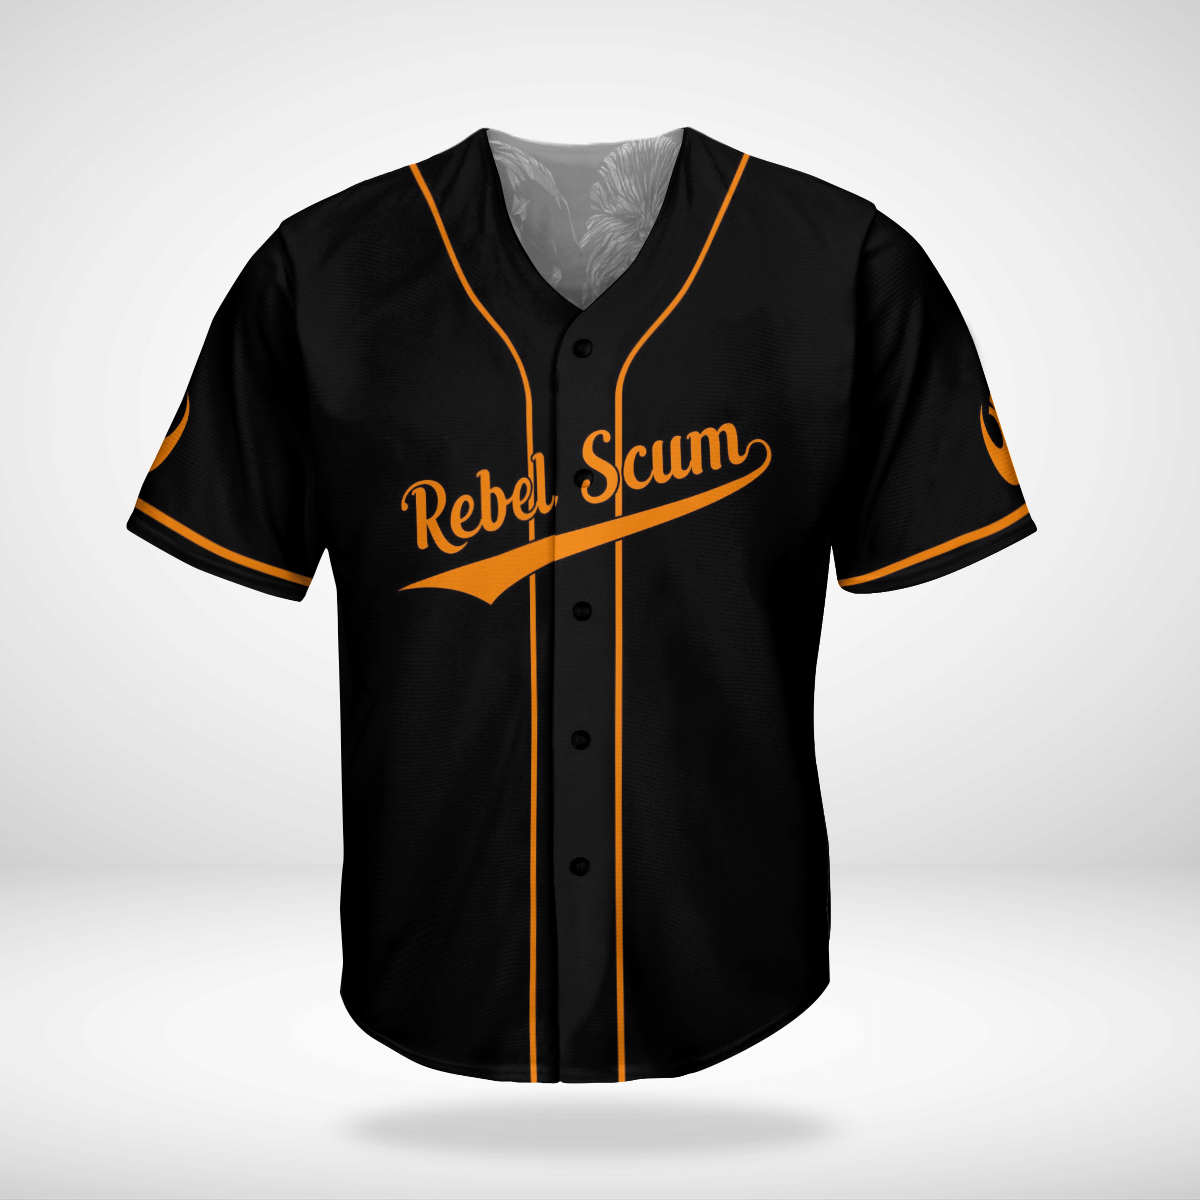 Rebel Scrum baseball shirt 1